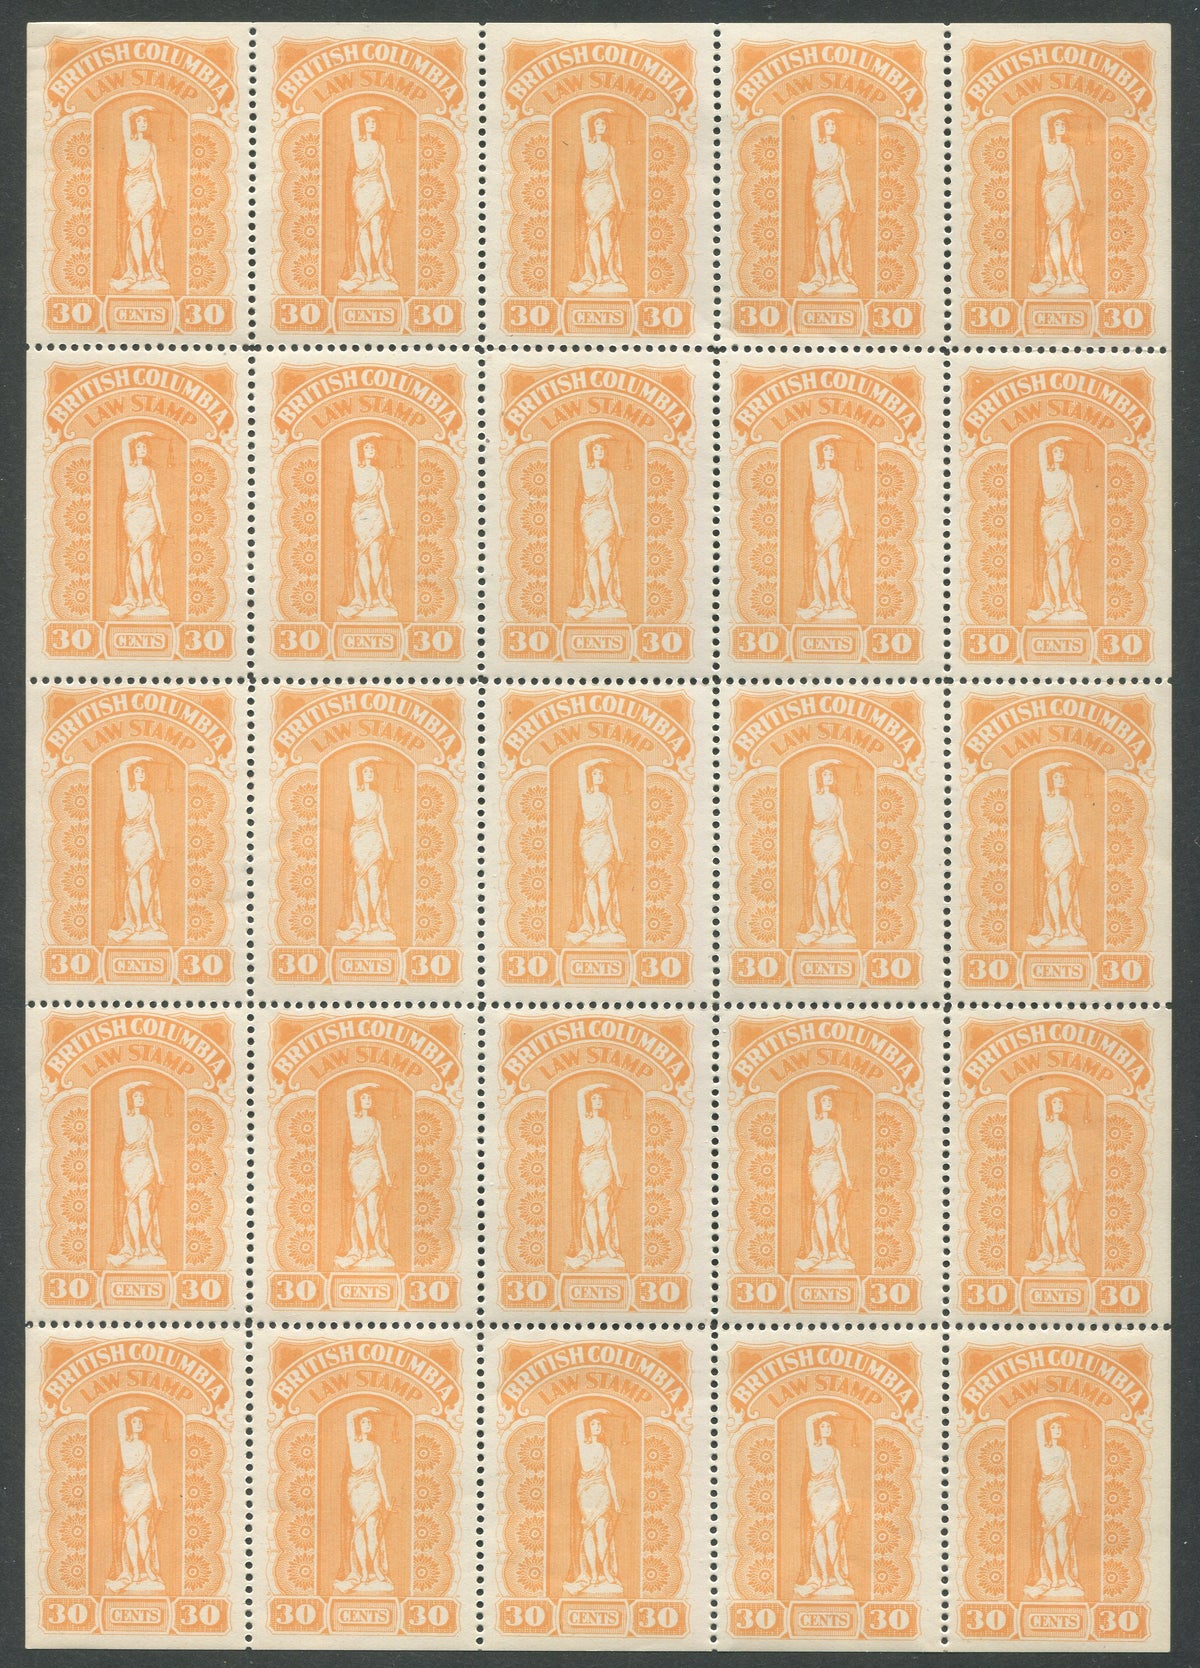 0029BC1802 - BCL29 - Mint Sheet of 25